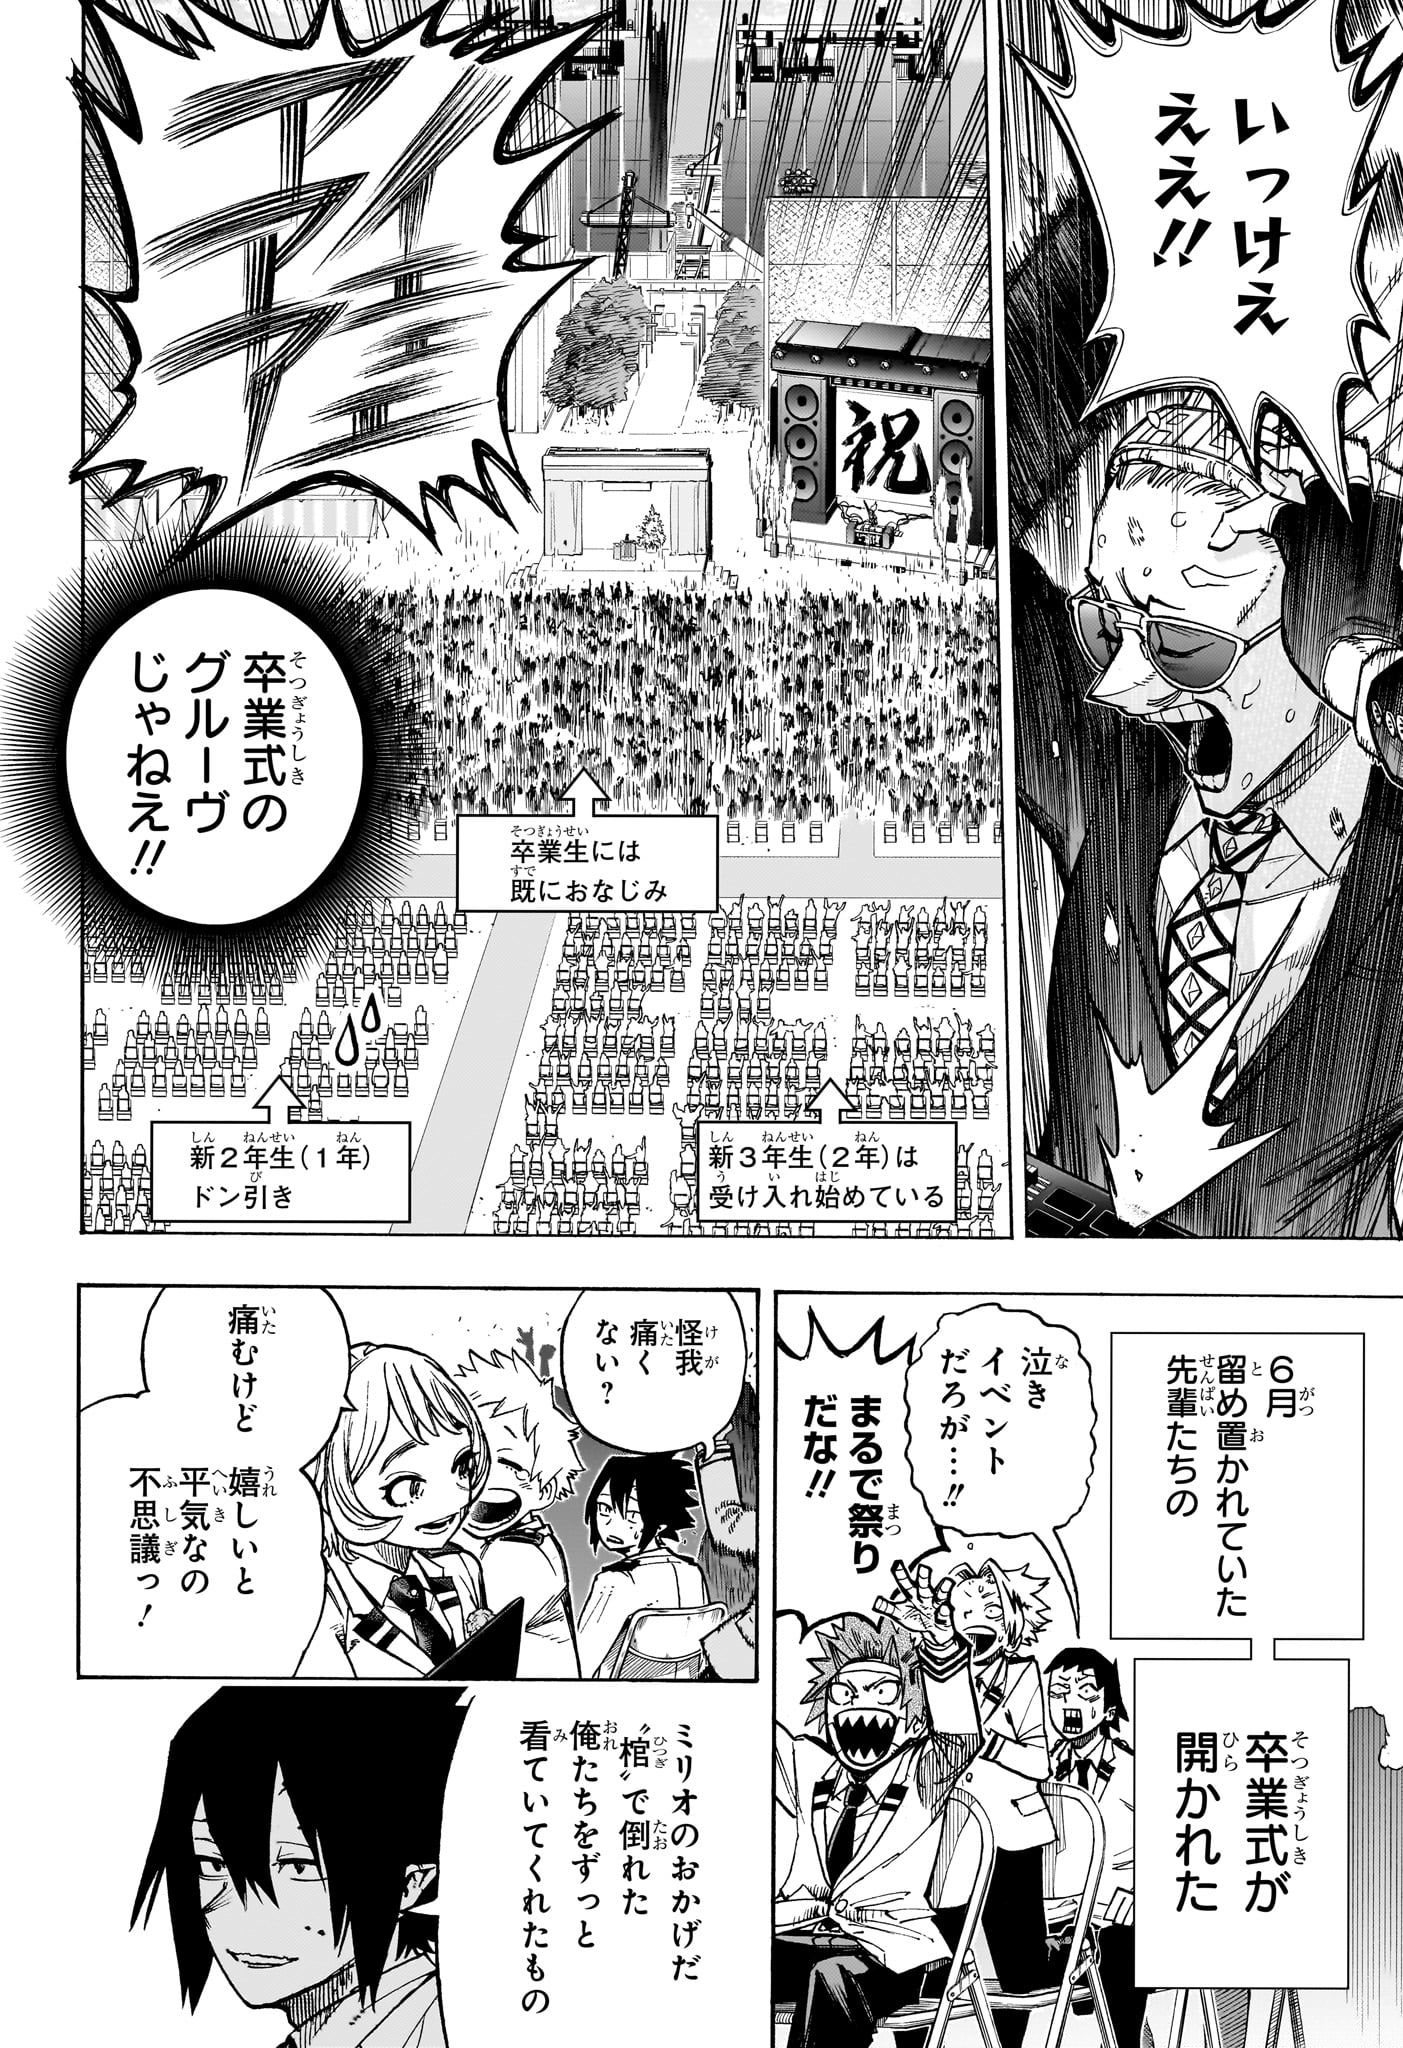 Boku no Hero Academia - Chapter 425 - Page 2